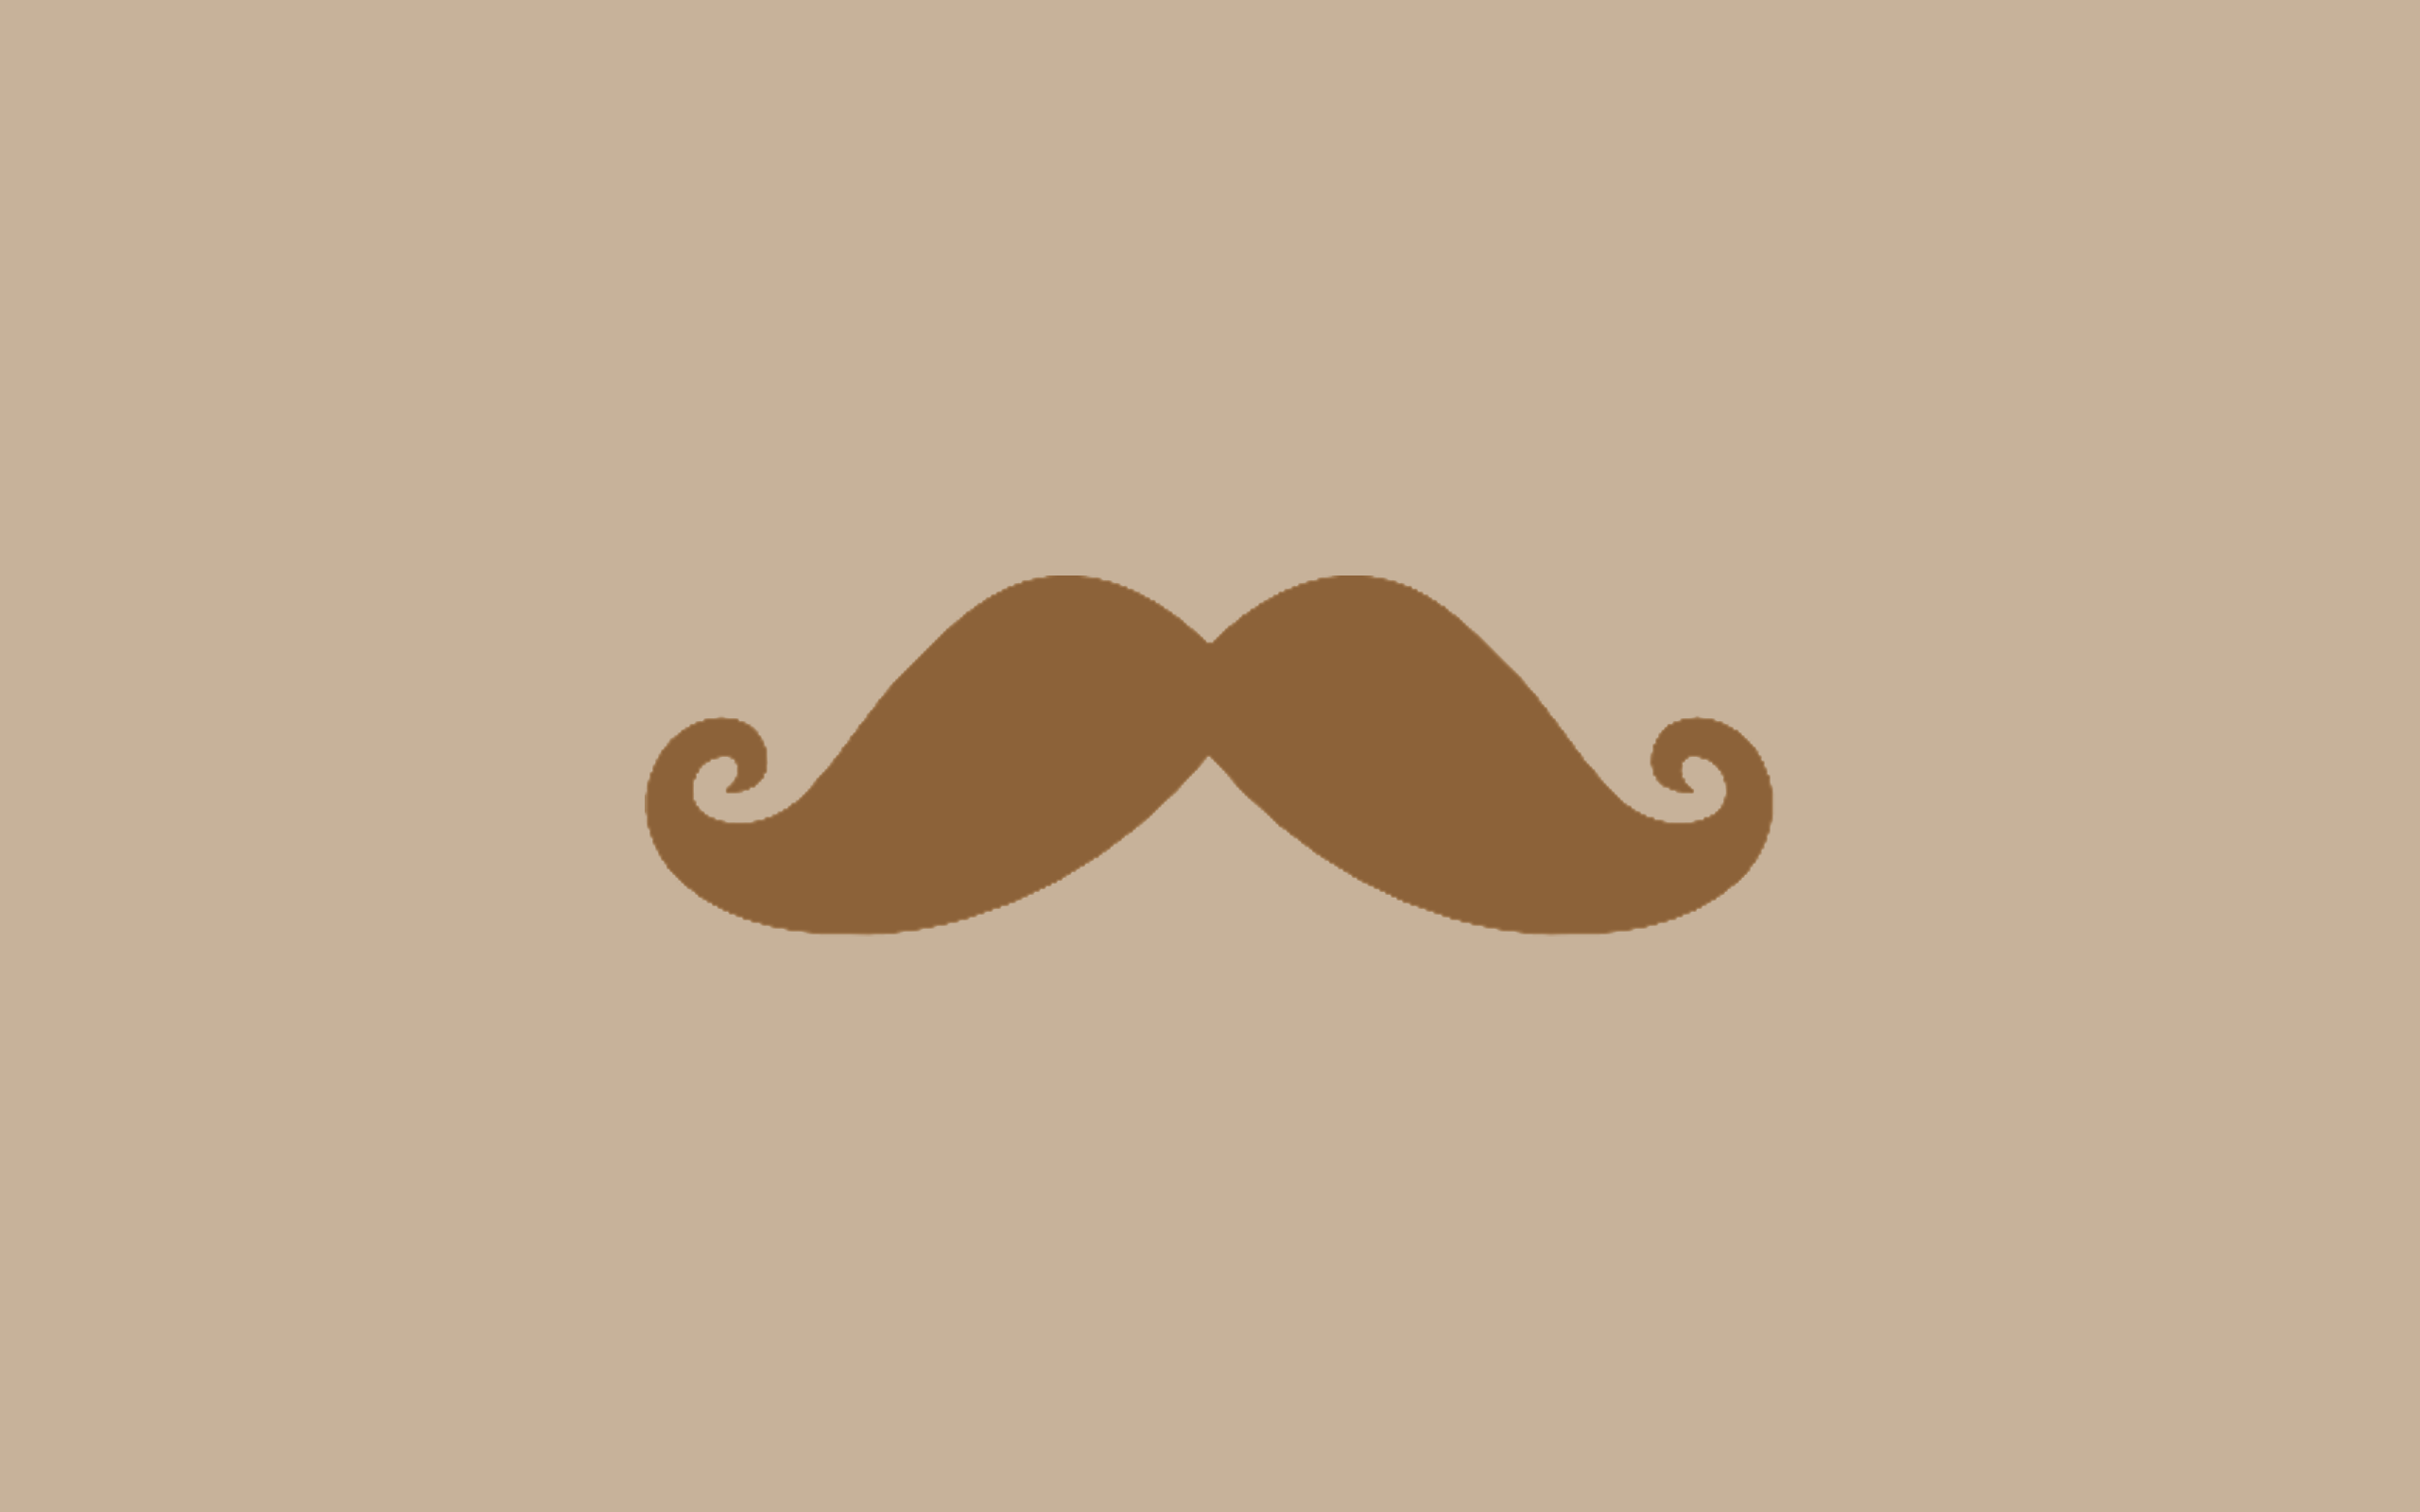 Moustache By Brianlechthaler